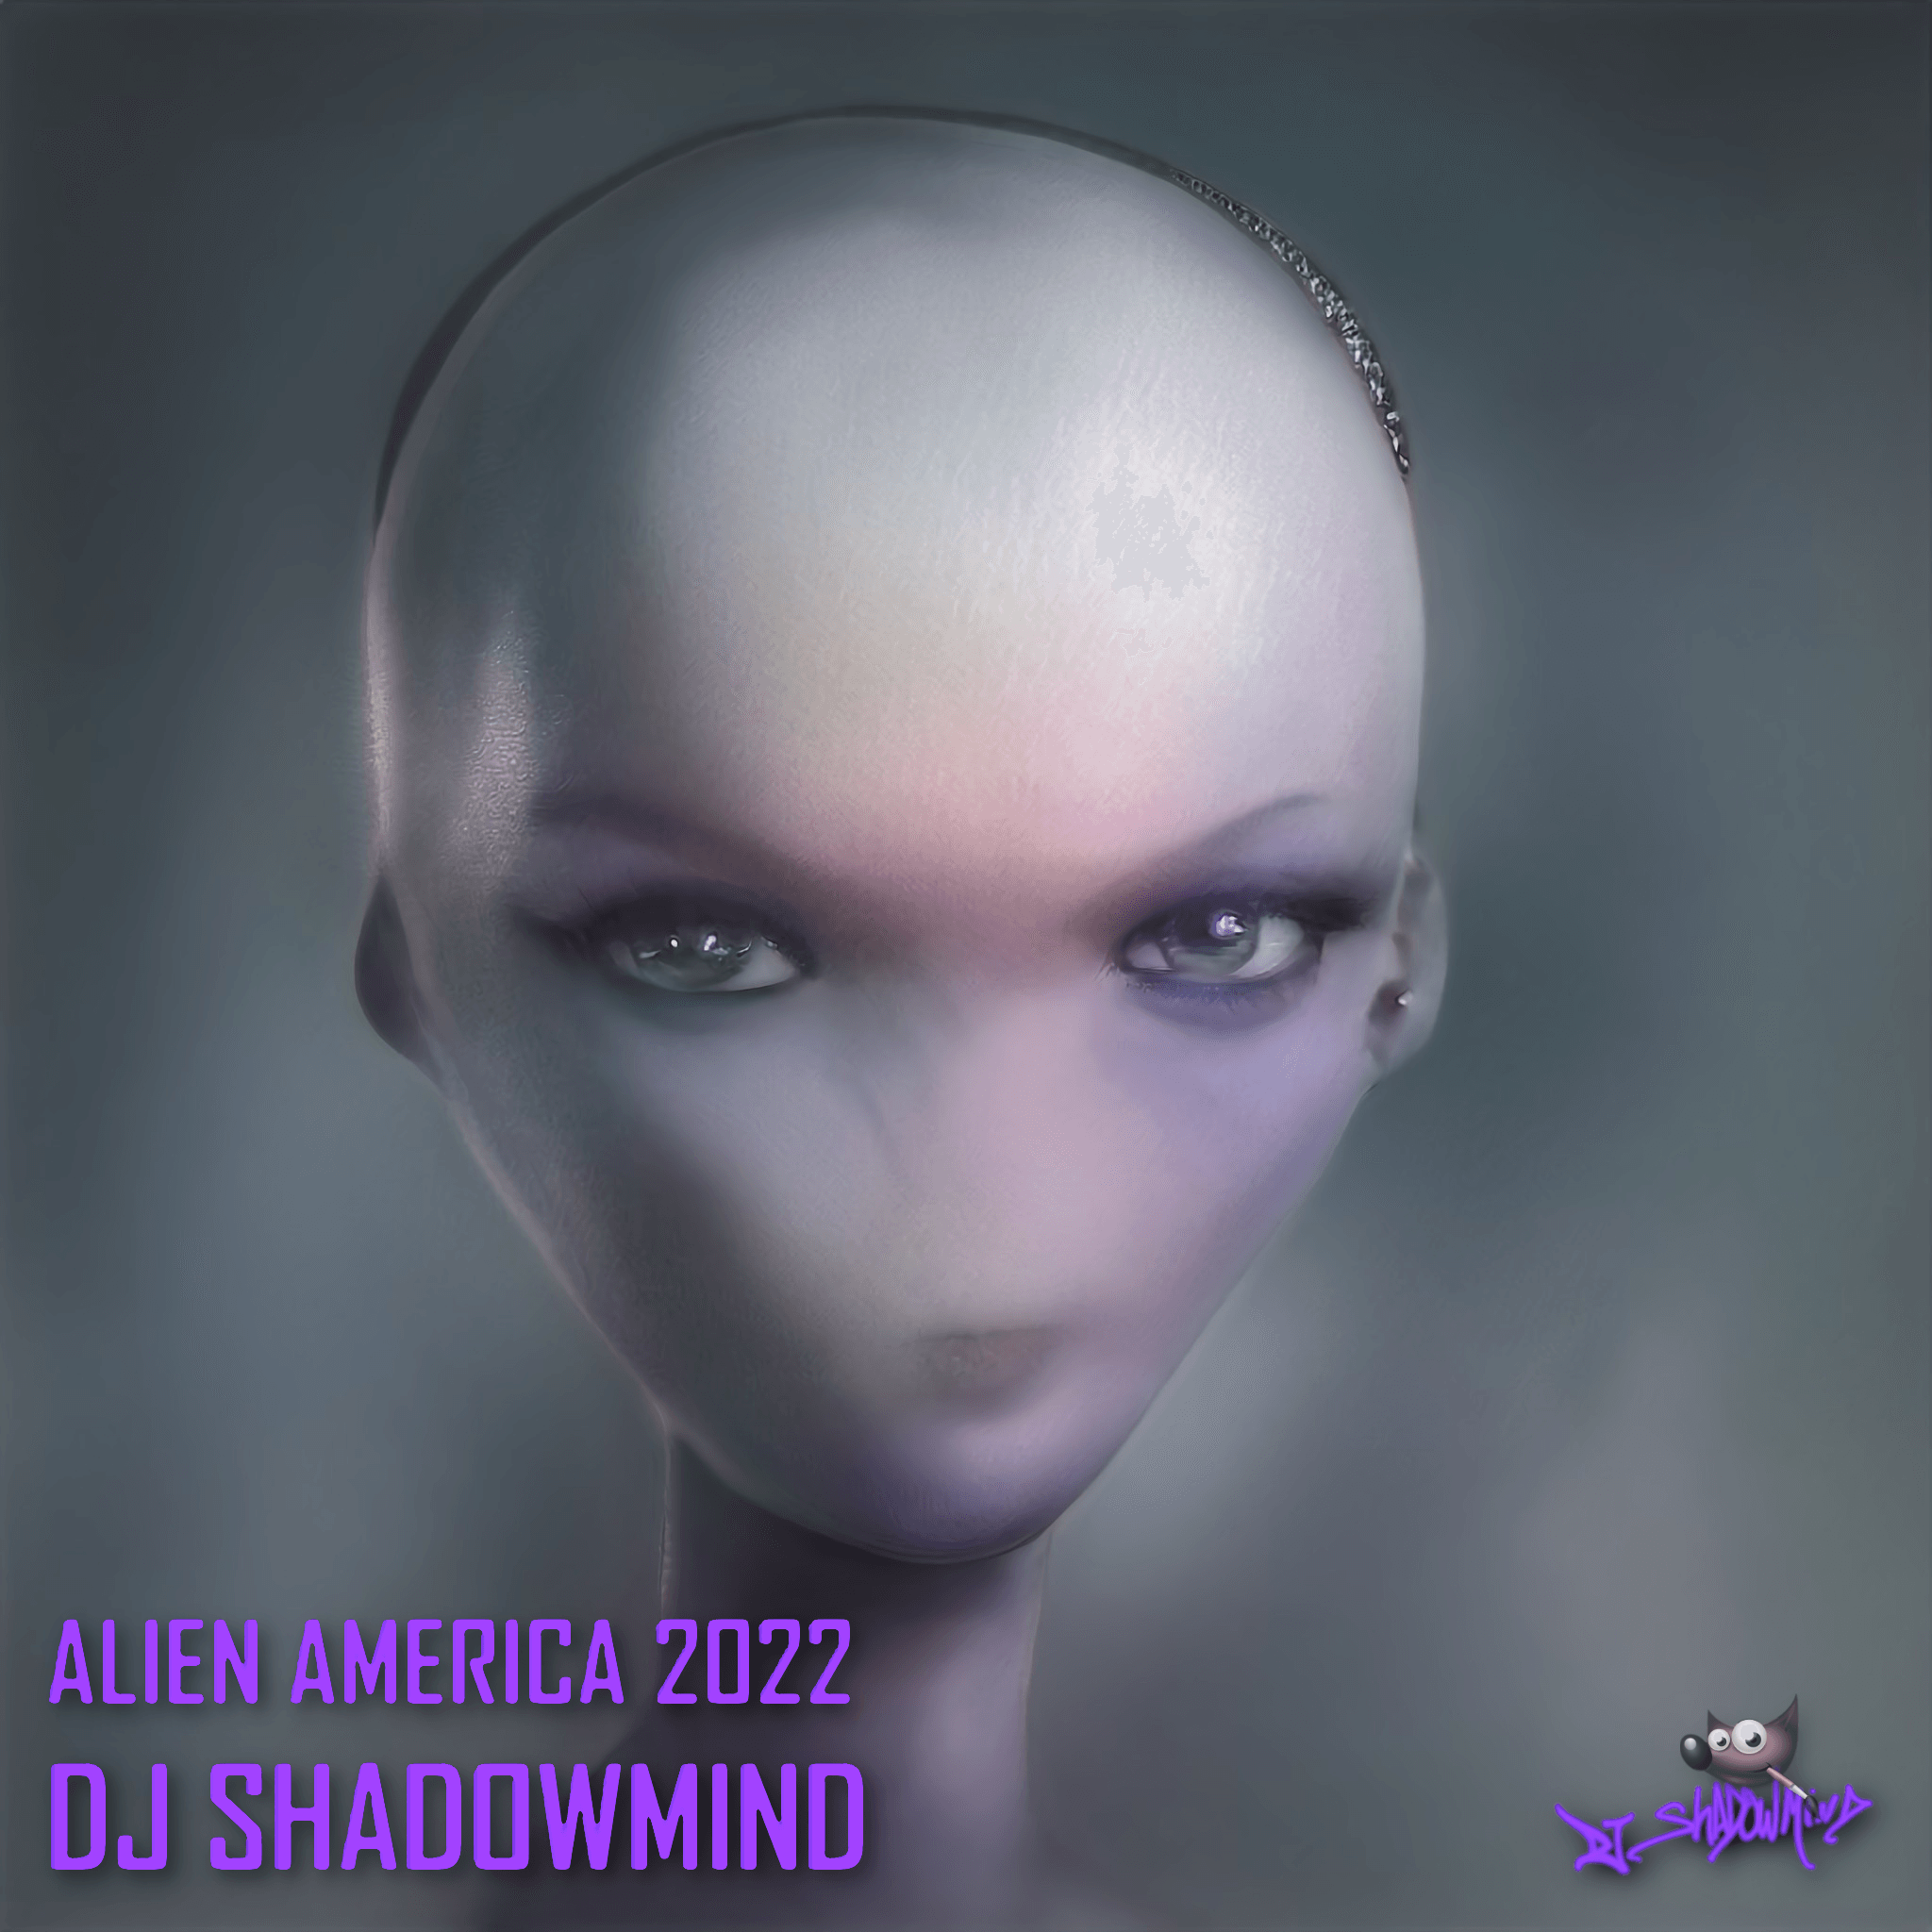 Alien America 2022 - Agent 018